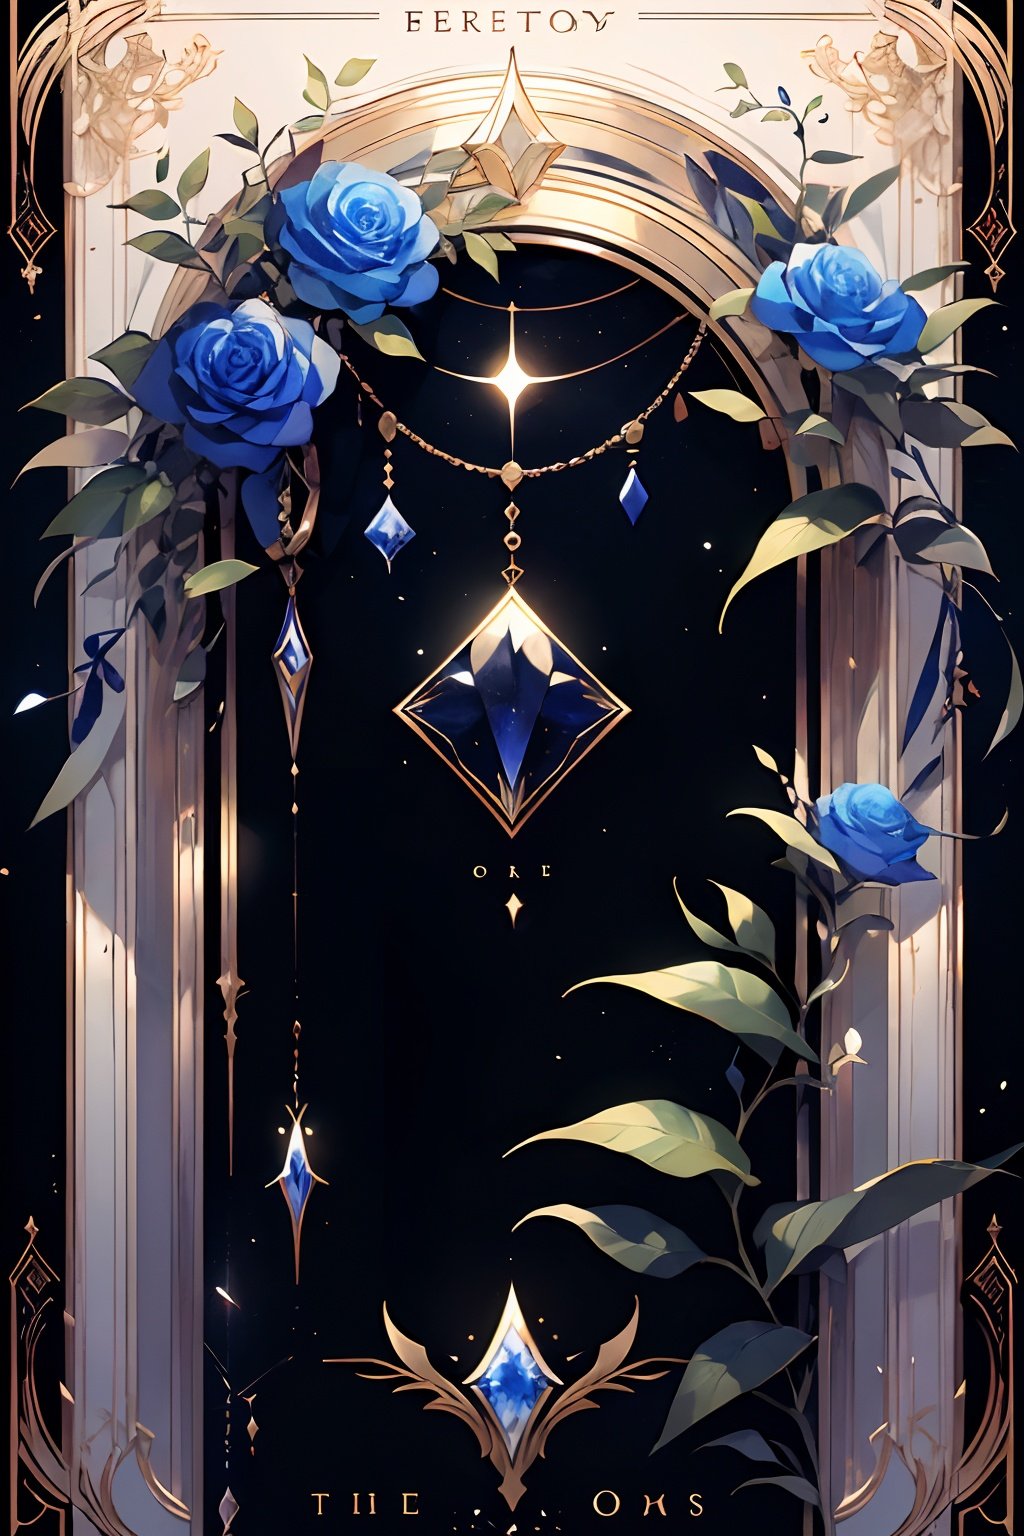 qztarot, no humans, flower, crystal, gem, still life, black background, blue flower, leaf, Tarot card